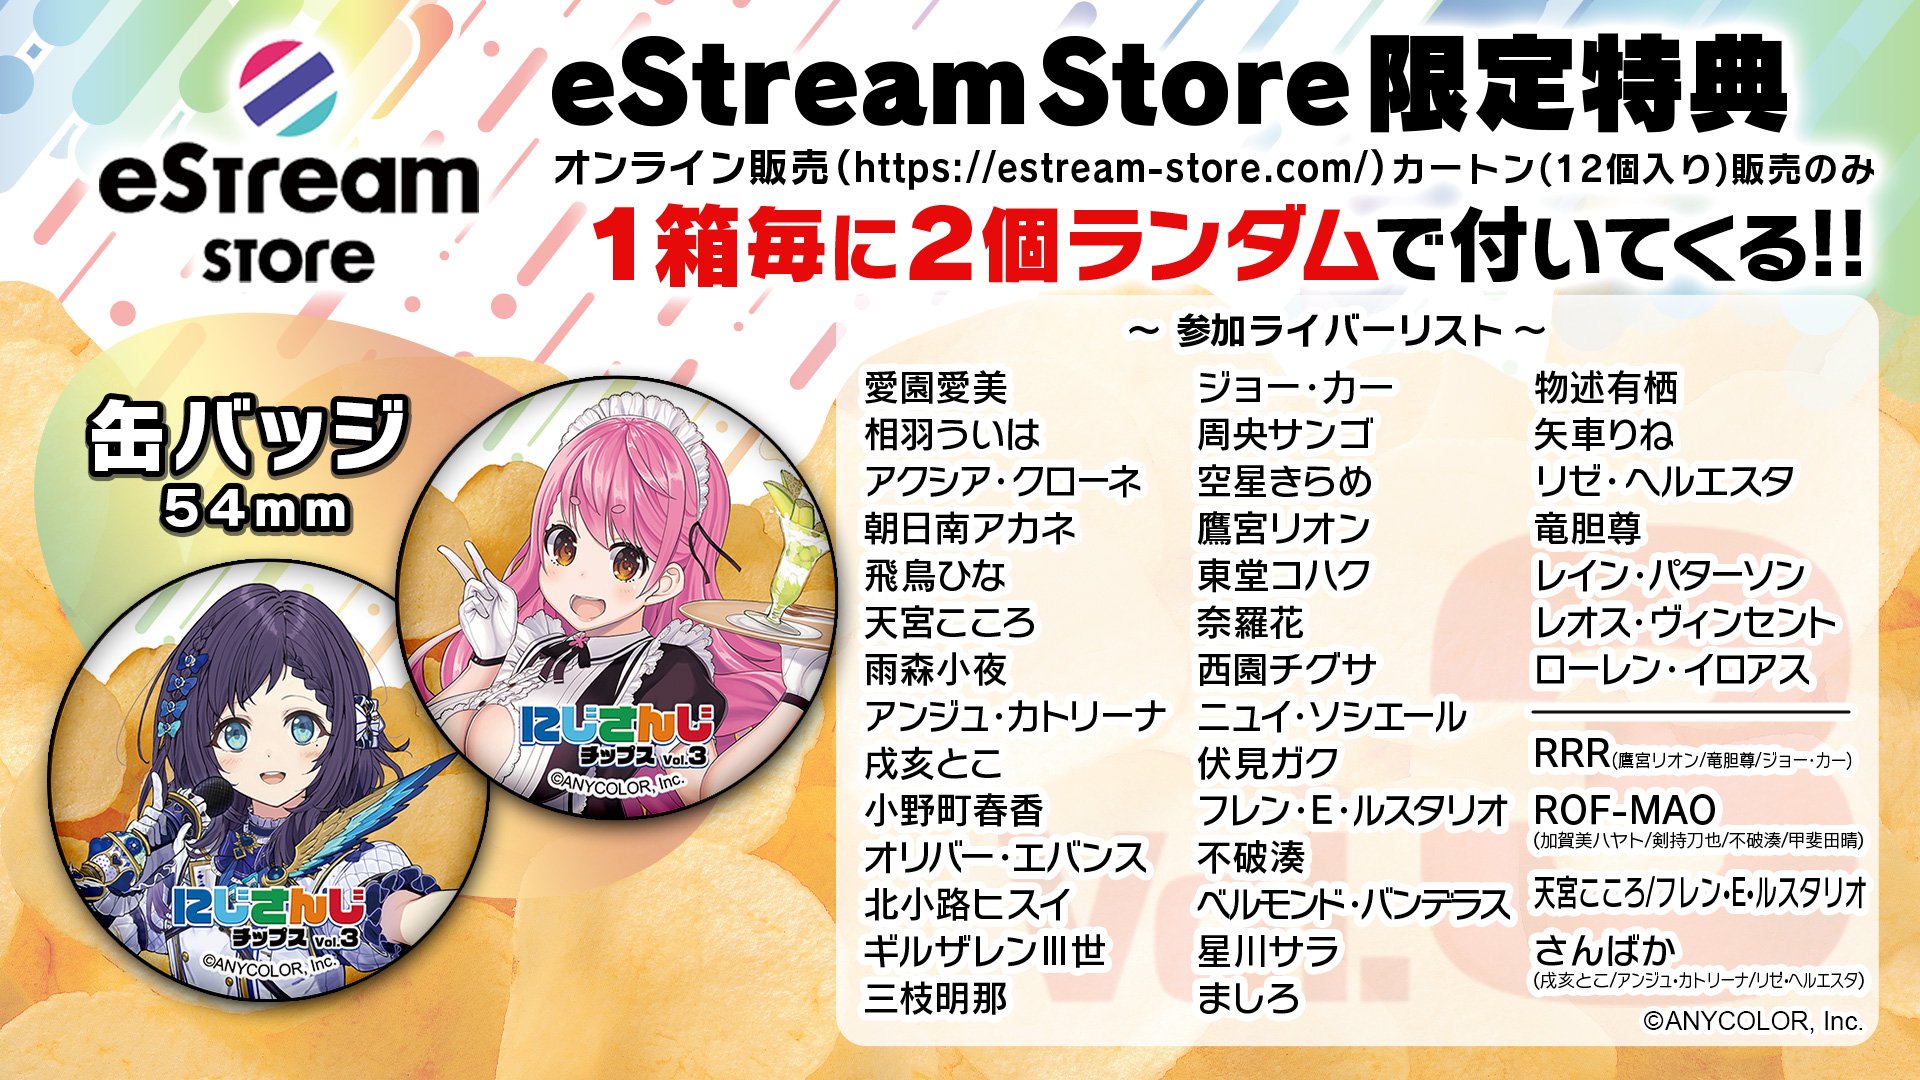 eStream Store 專屬福利